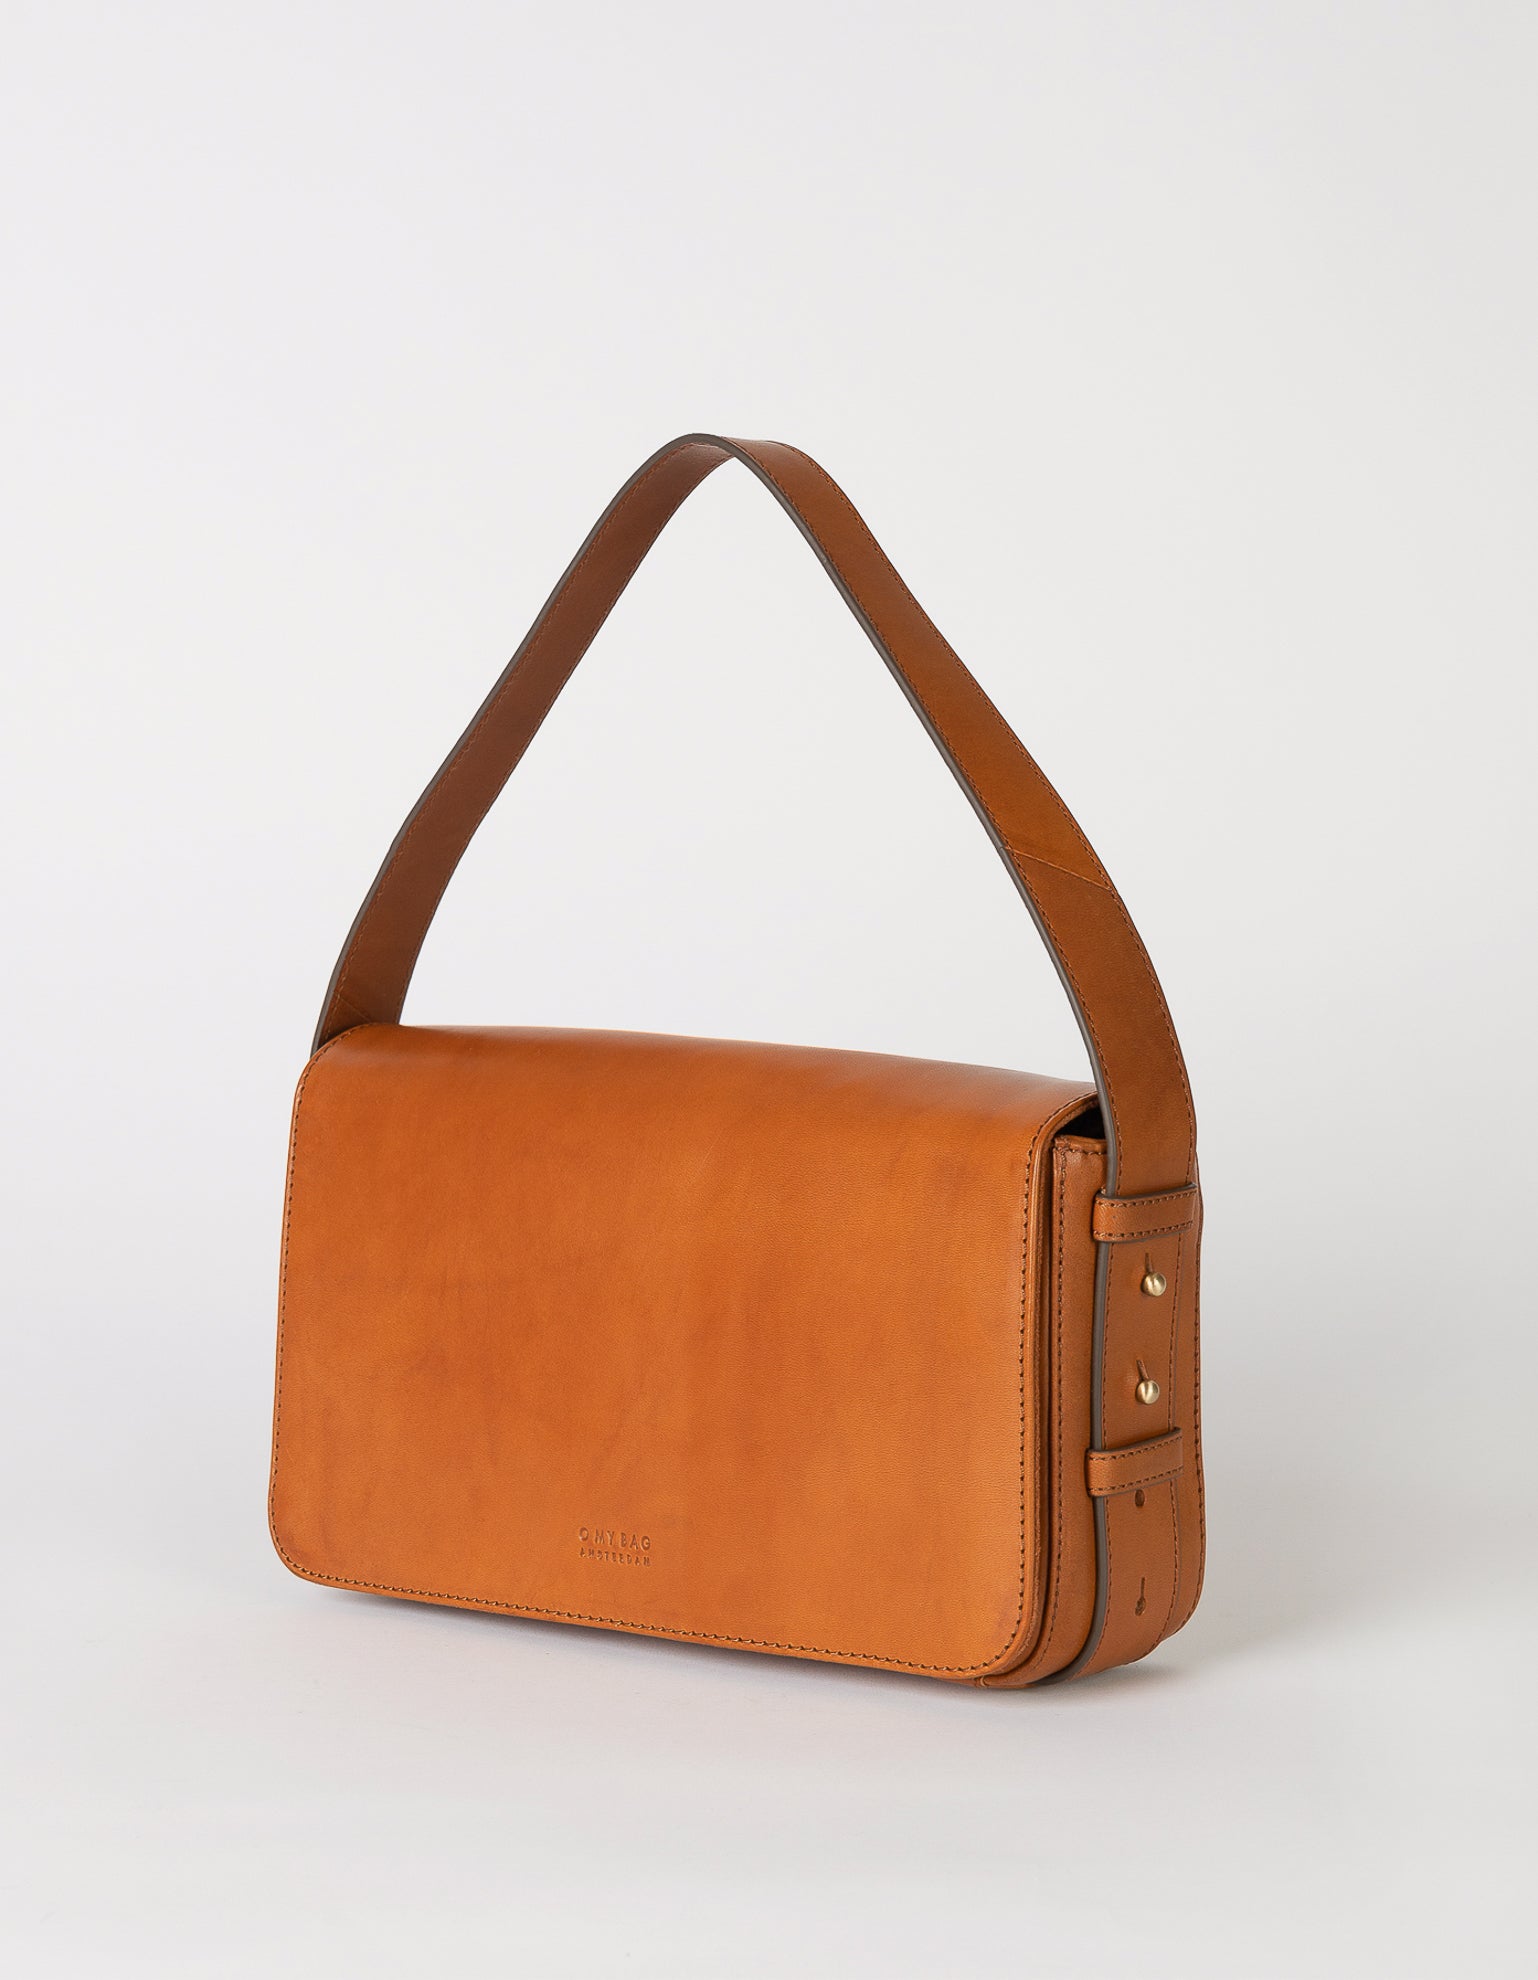 Cognac Baguette Leather womens handbag. Square shape with an adjustable strap. Side product image.